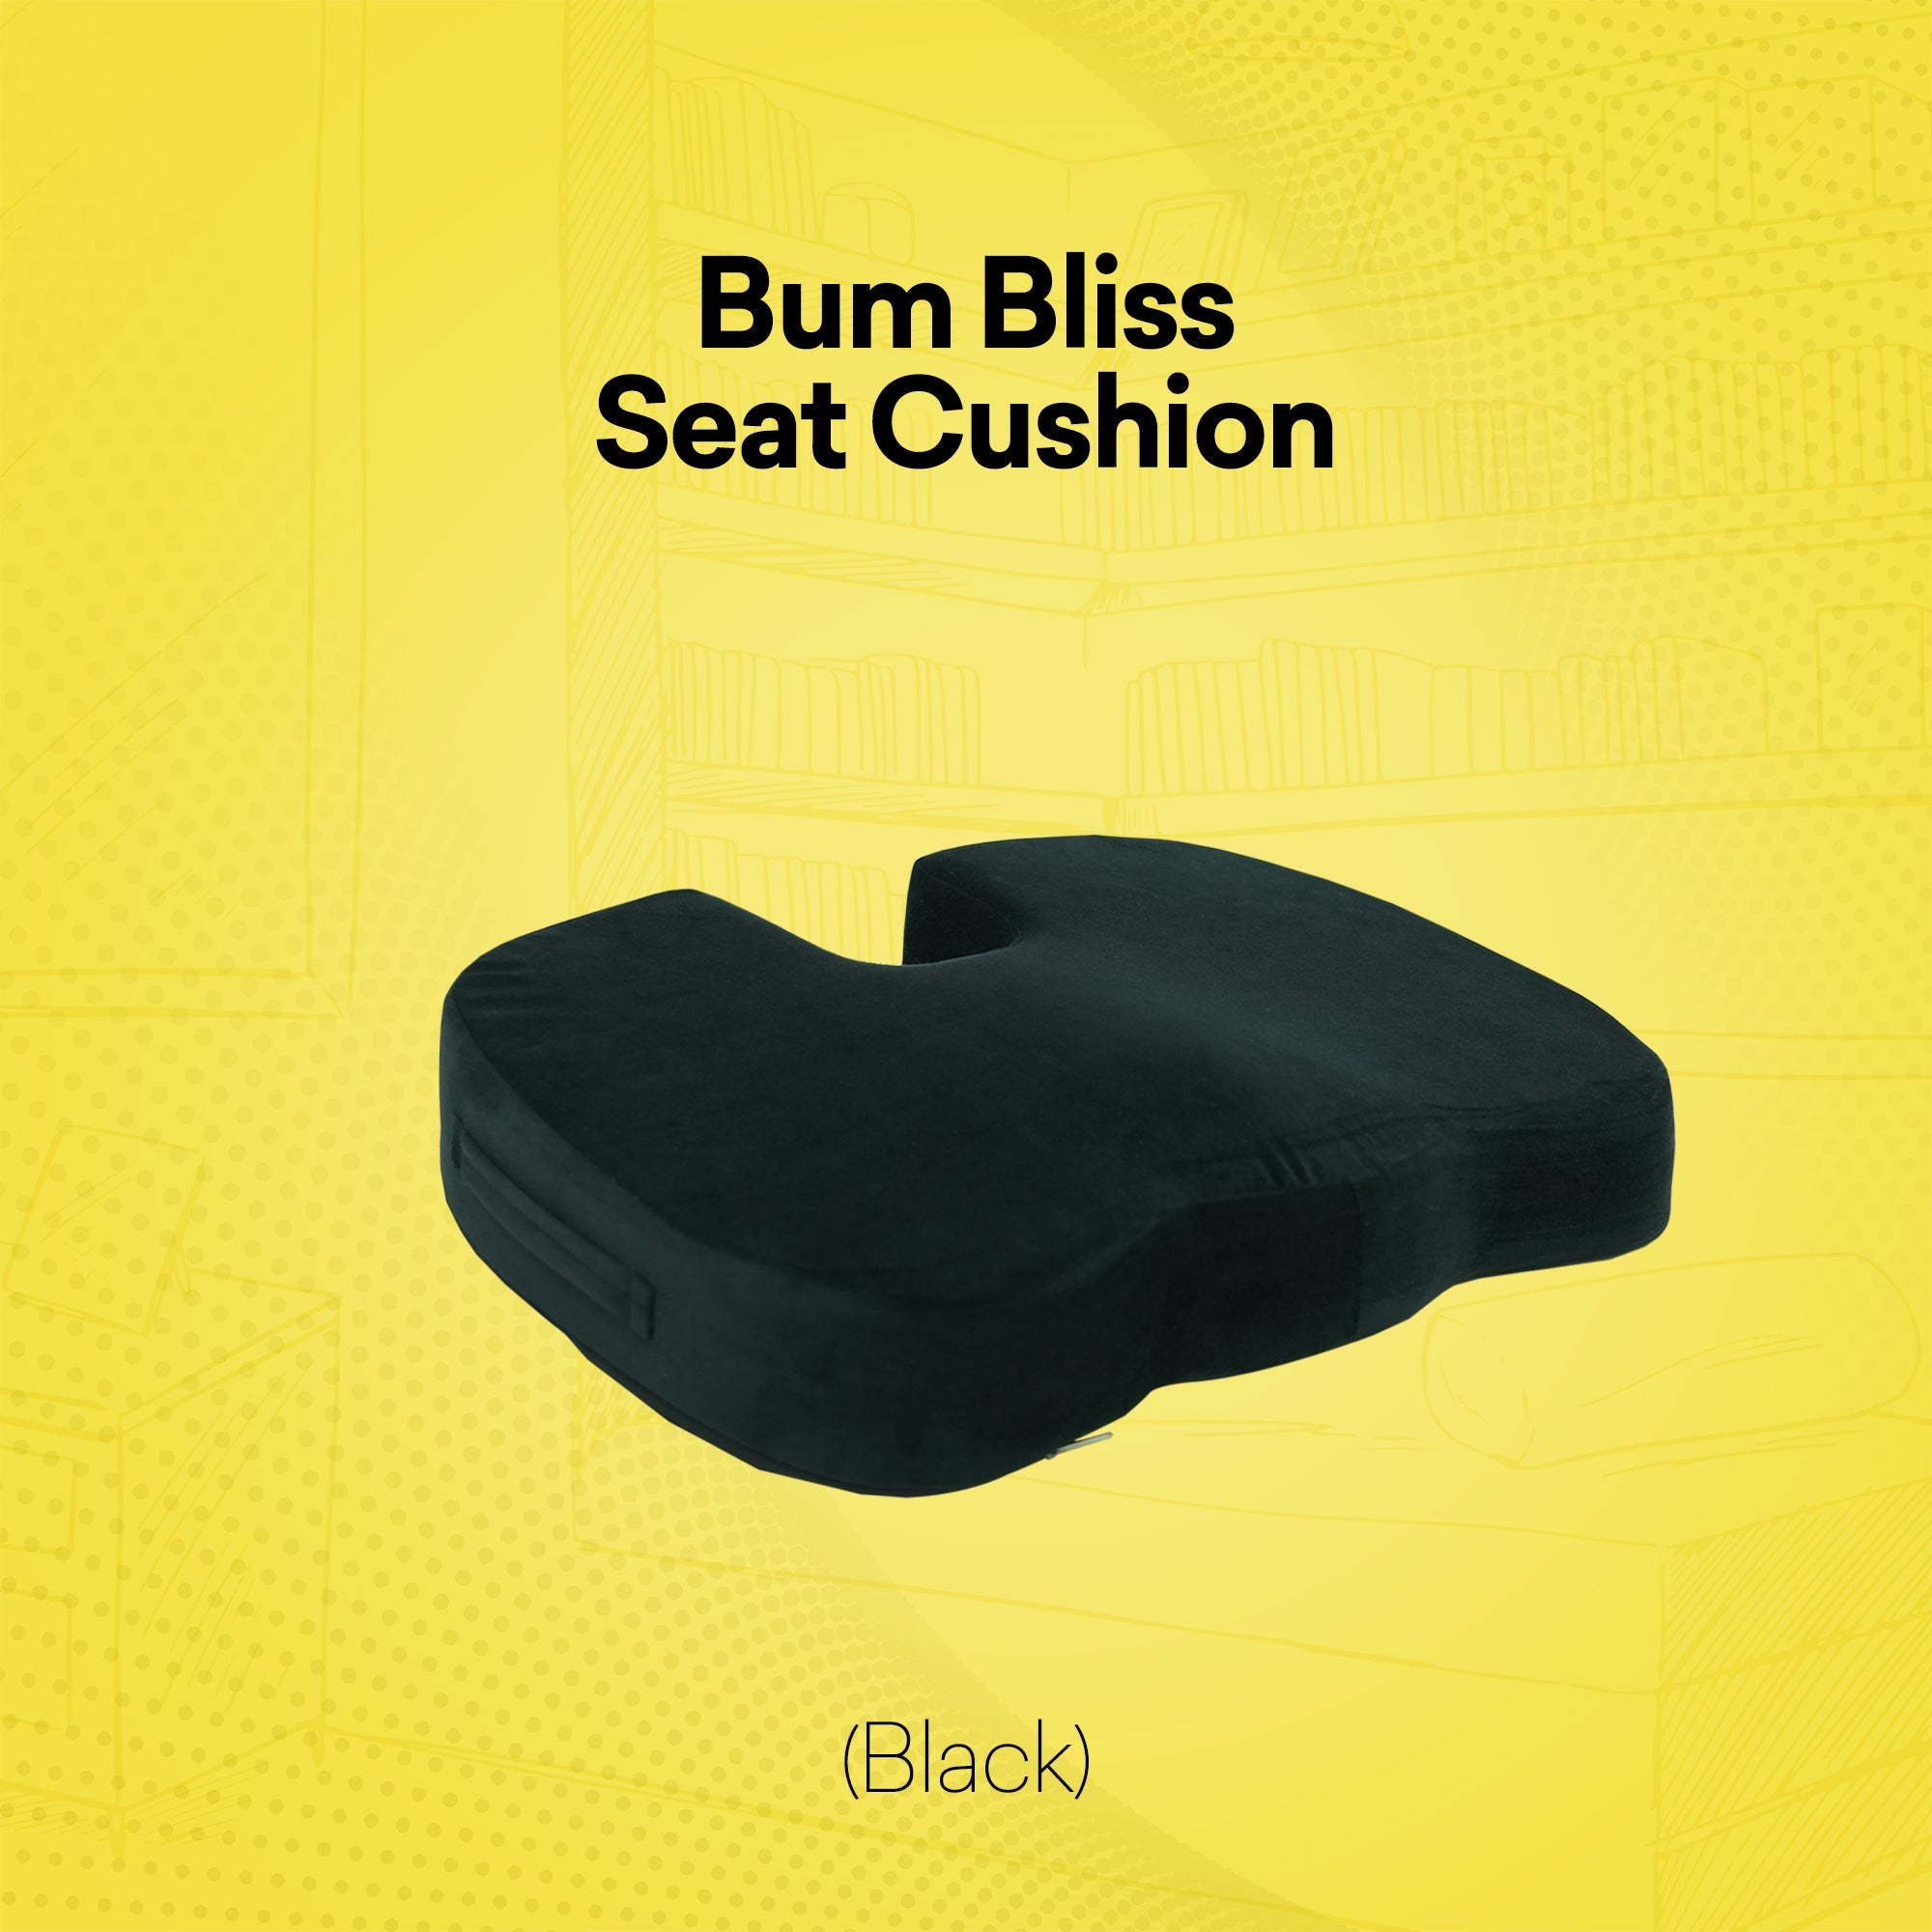 FlexHouse Bum Bliss Seat Cushion's